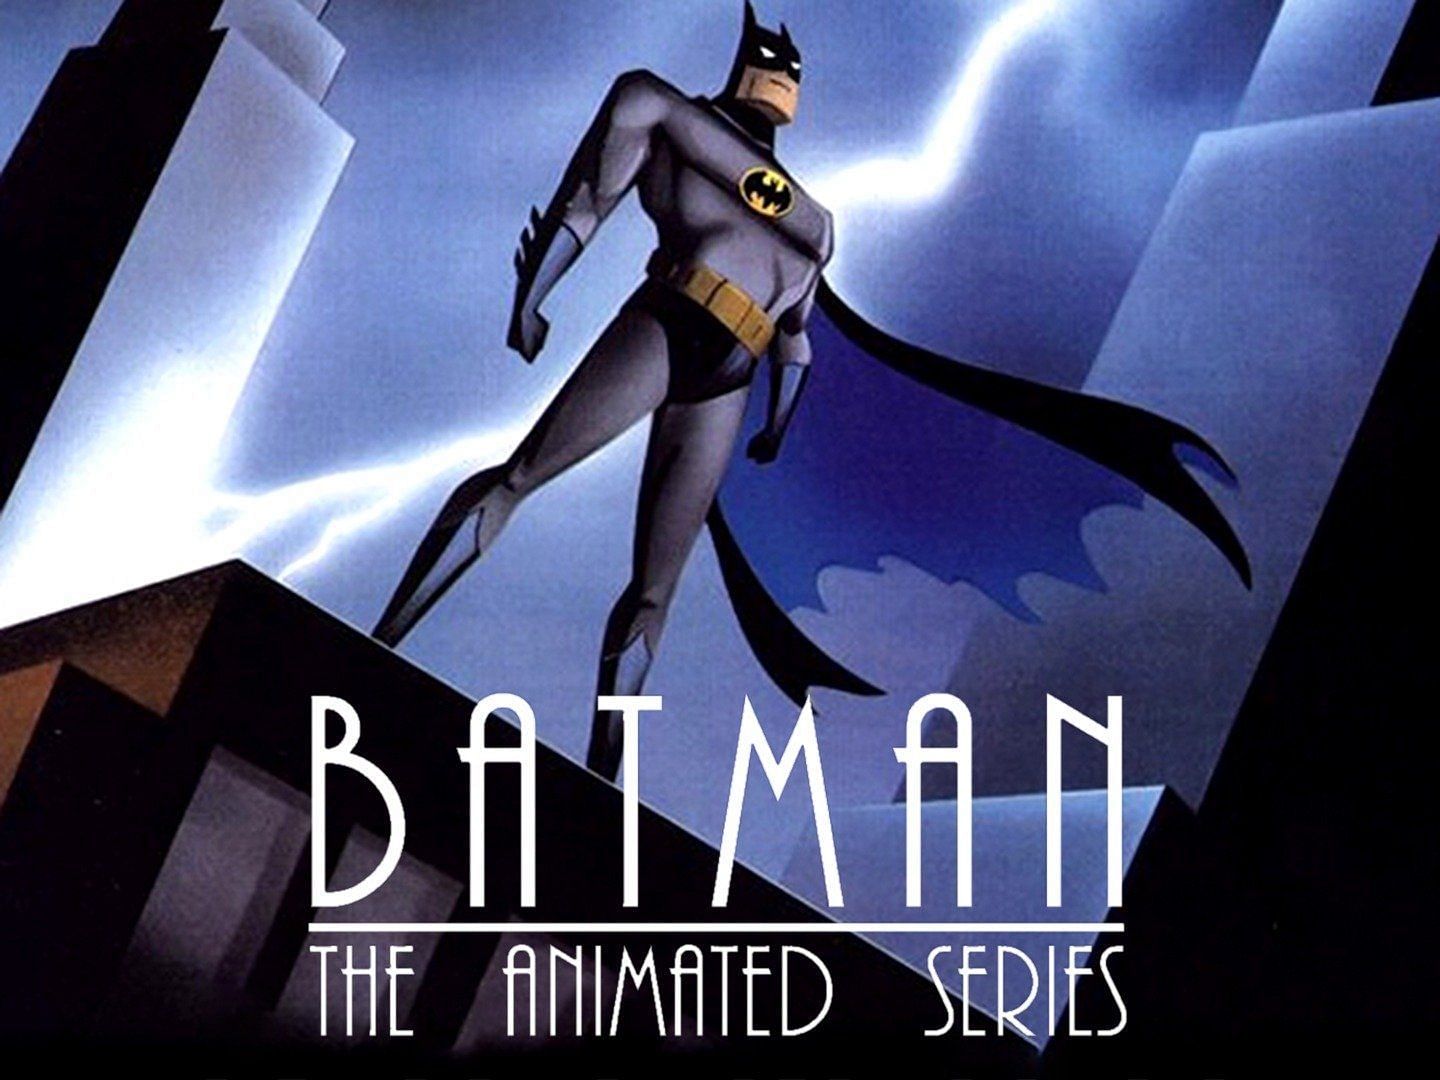 Batman: The Animated Series (Image via Warner Bros)